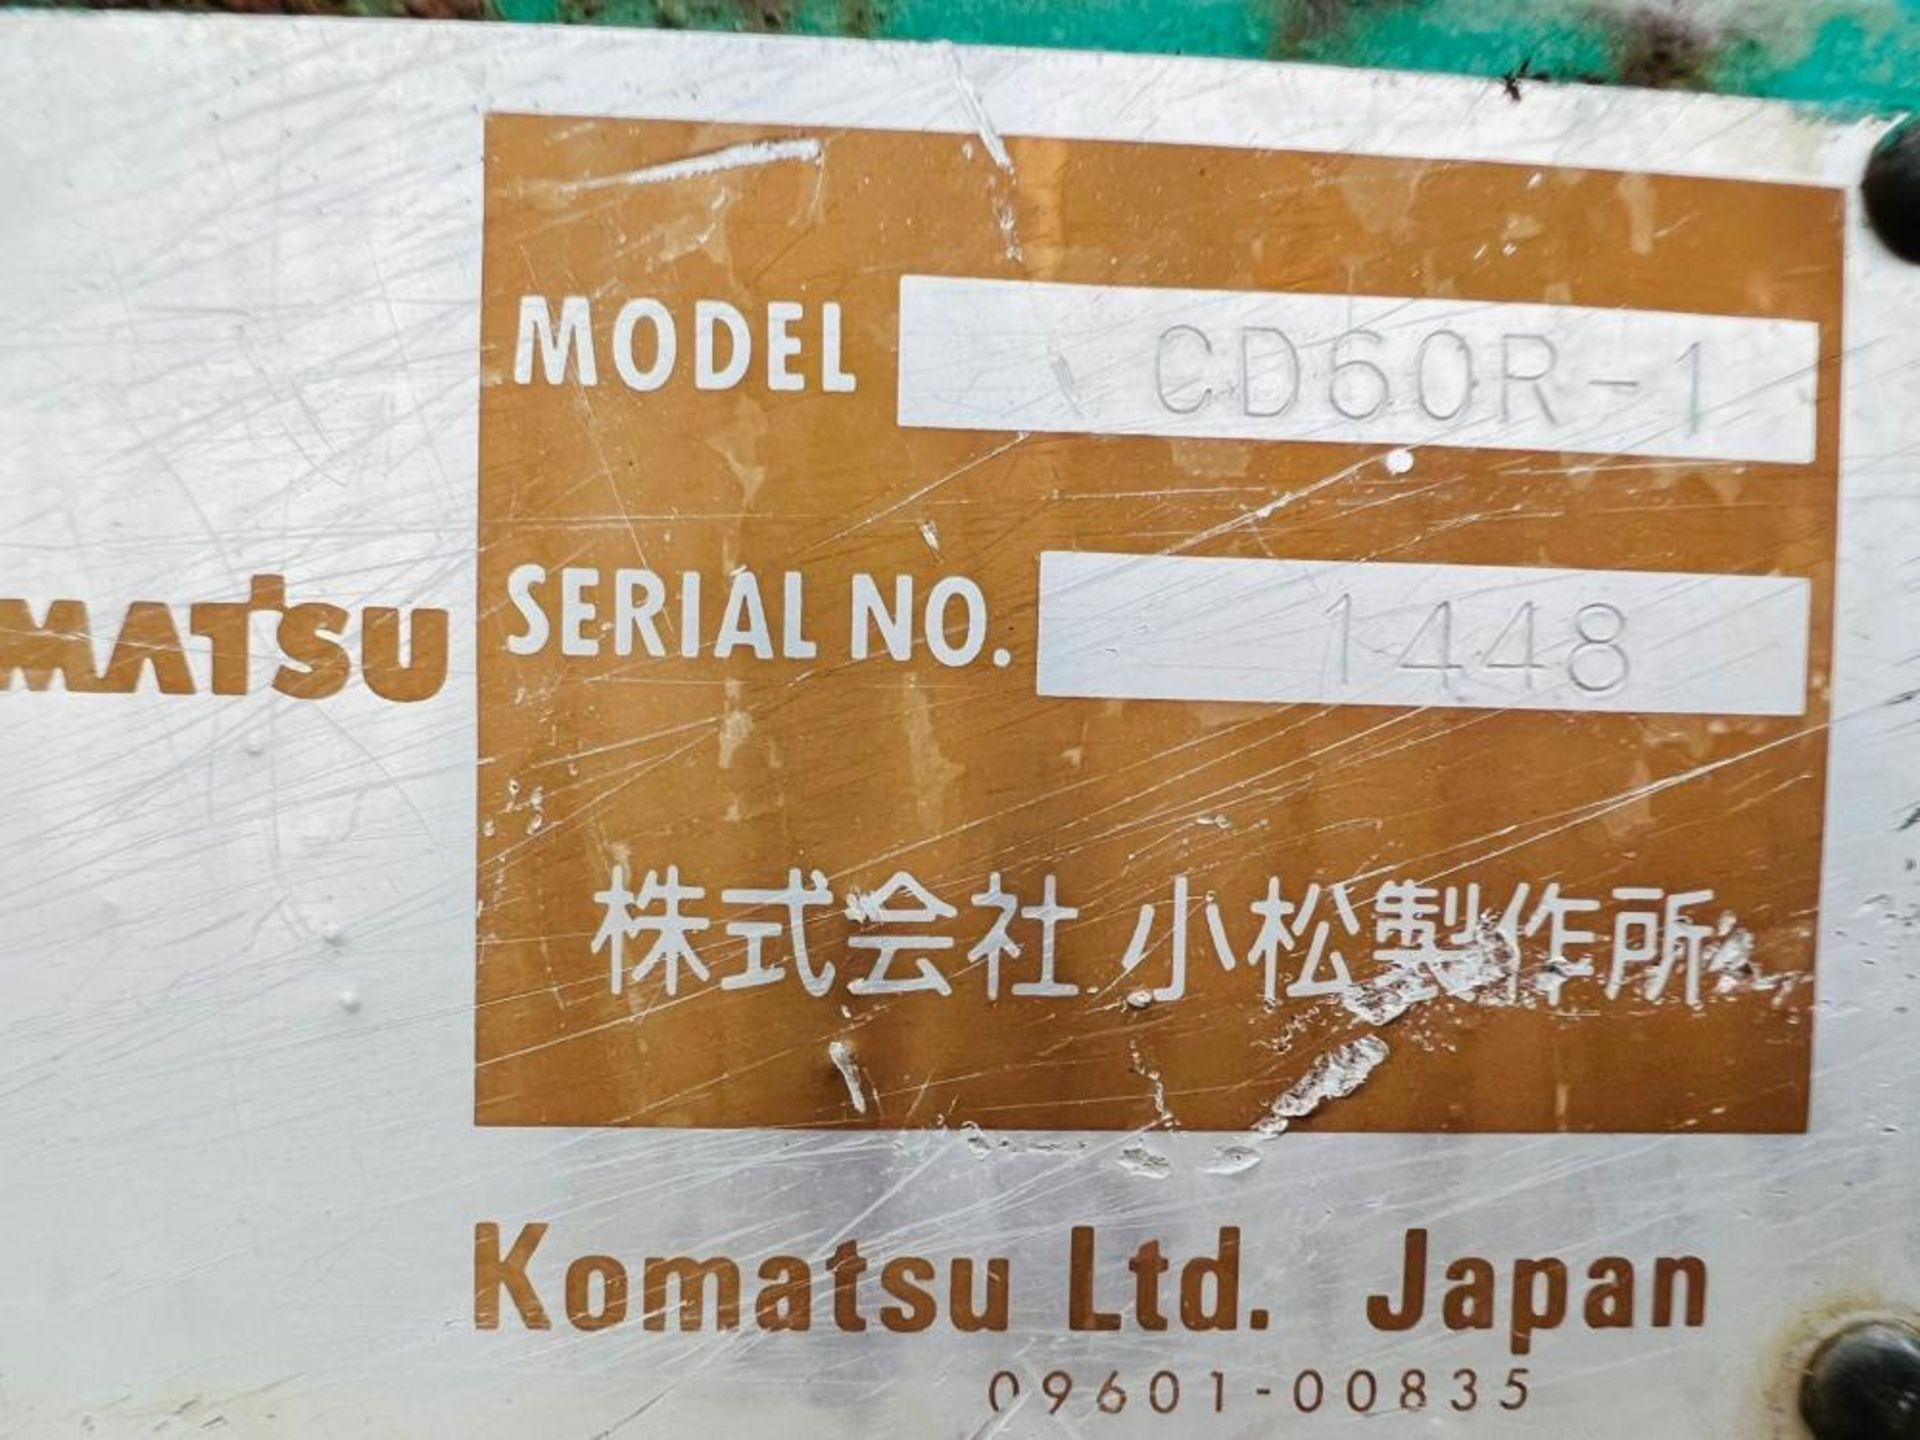 Komatsu Cd60r-1 Swivel Tip Dumper C/W Hydraulic Tip - Image 7 of 10